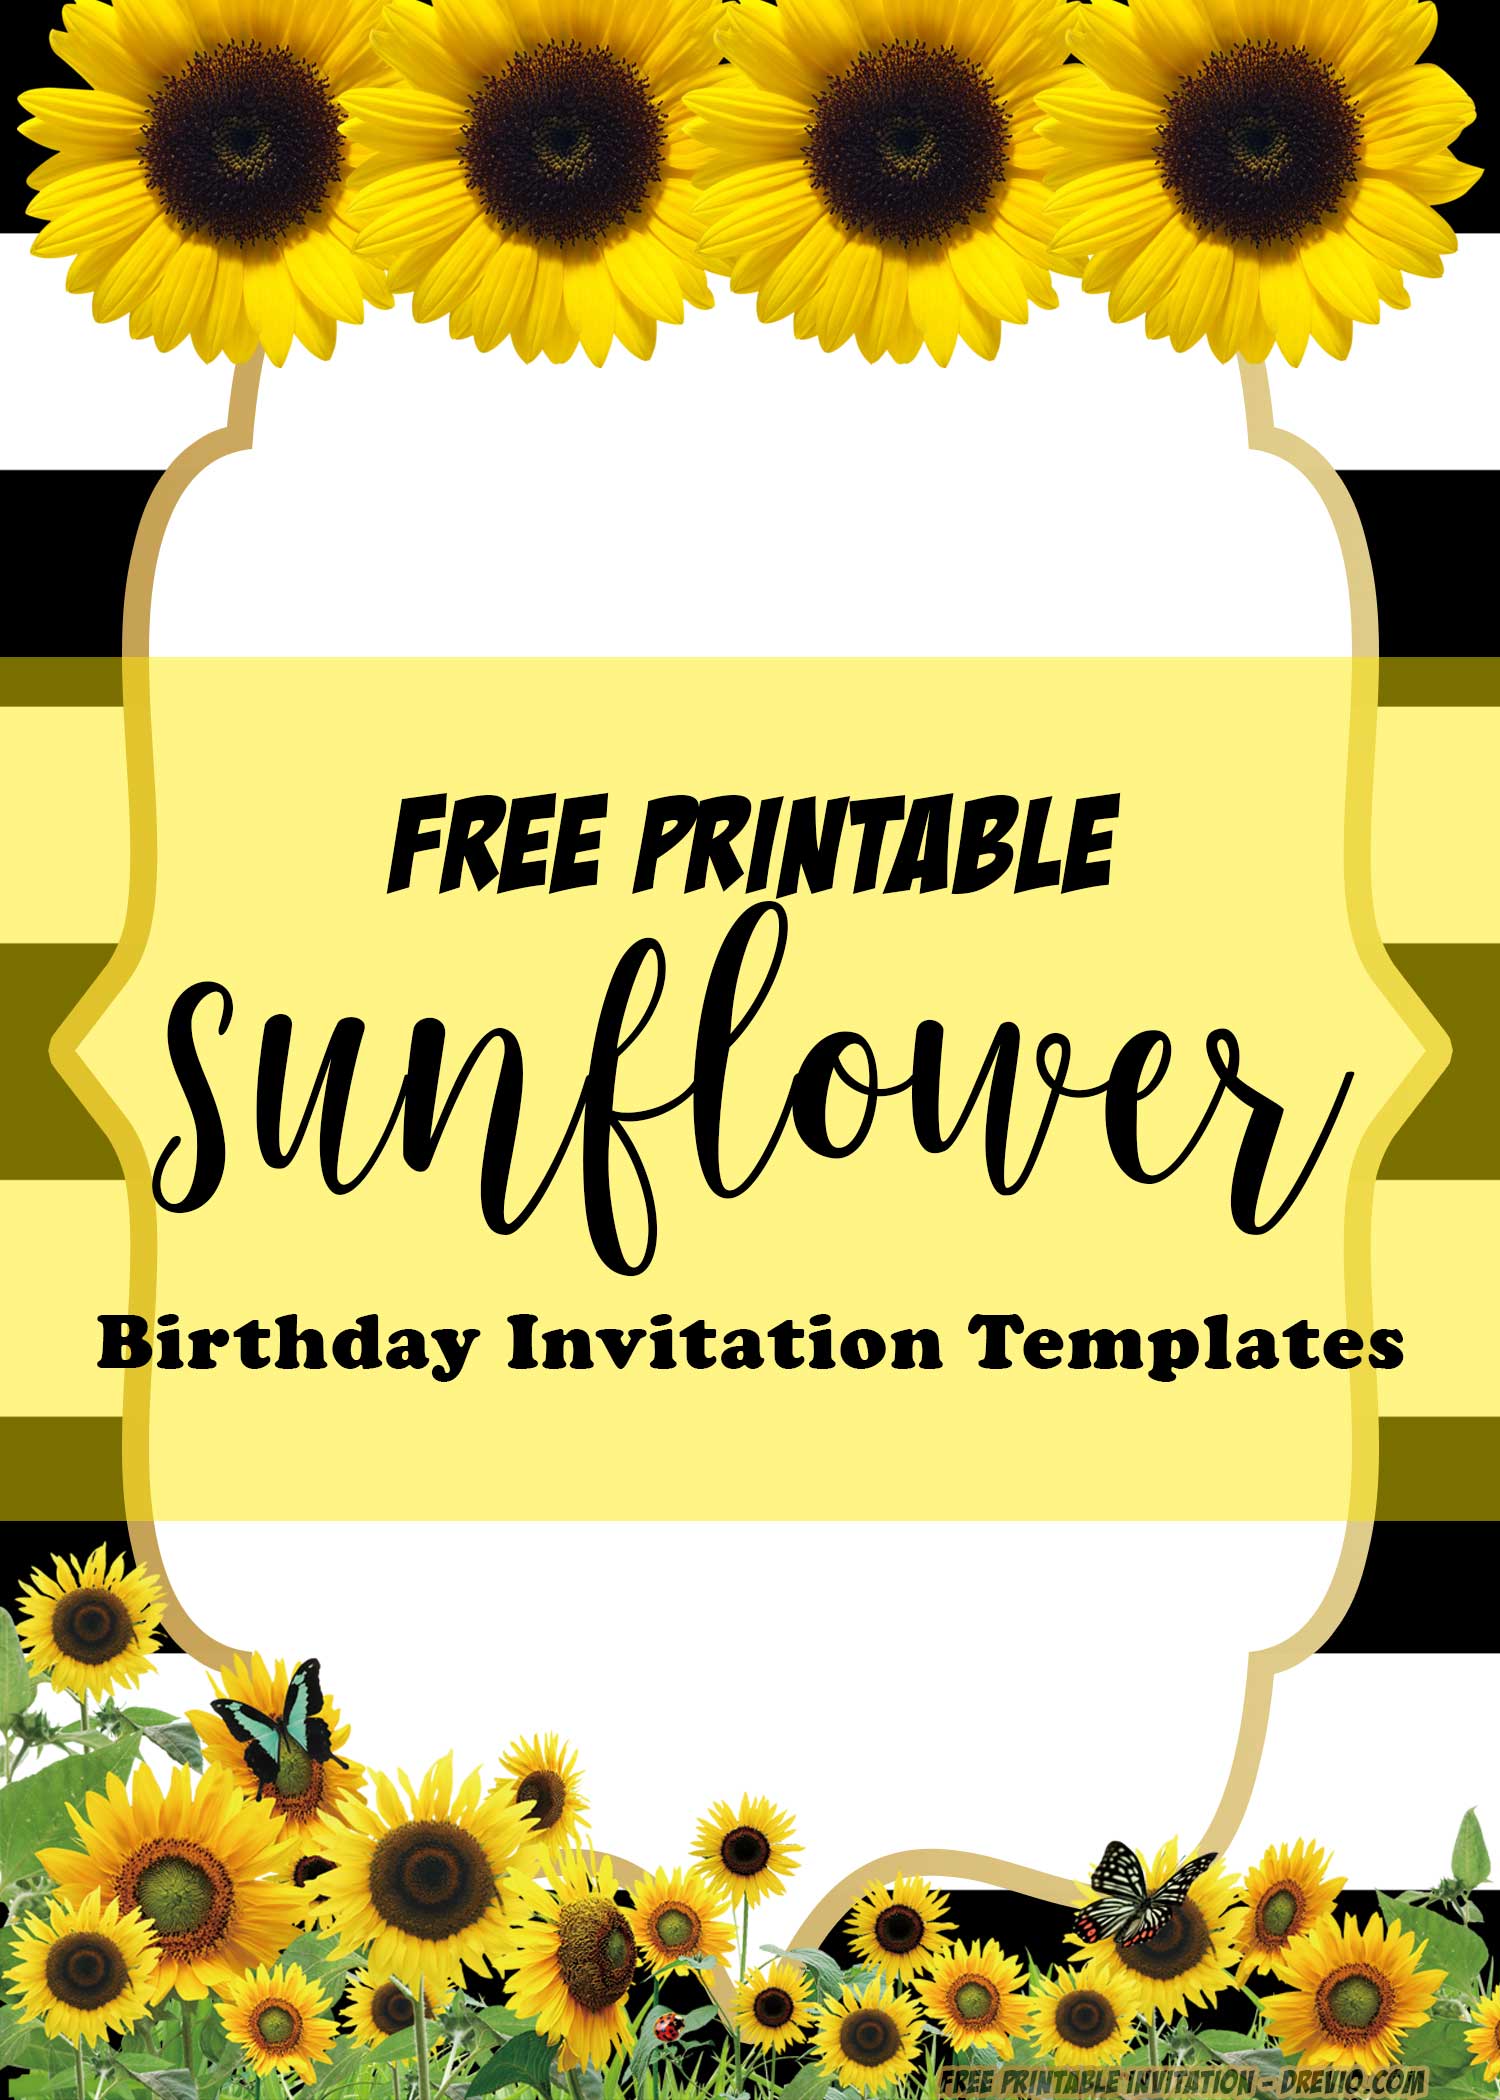 free-printable-sunflower-birthday-invitations-templates-printable